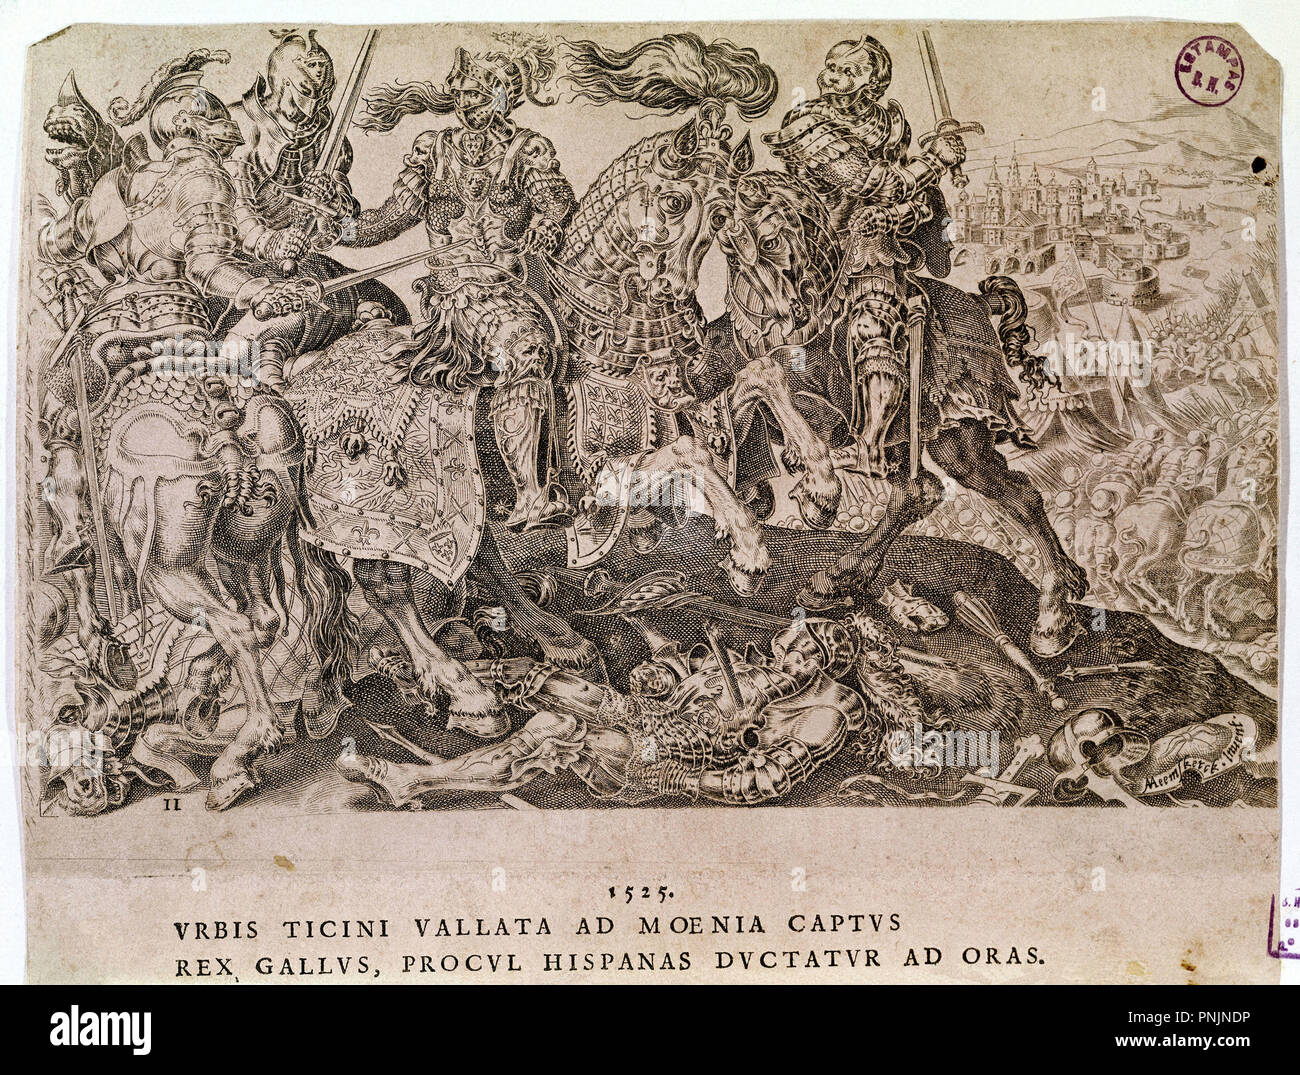 Charles V's victories. Francis I emprisoned. Battle of Pavia. 1525. Madrid, National library (engravings). Author: HEEMSKERCK, MARTIN VAN. Location: BIBLIOTECA NACIONAL-COLECCION. MADRID. SPAIN. Stock Photo